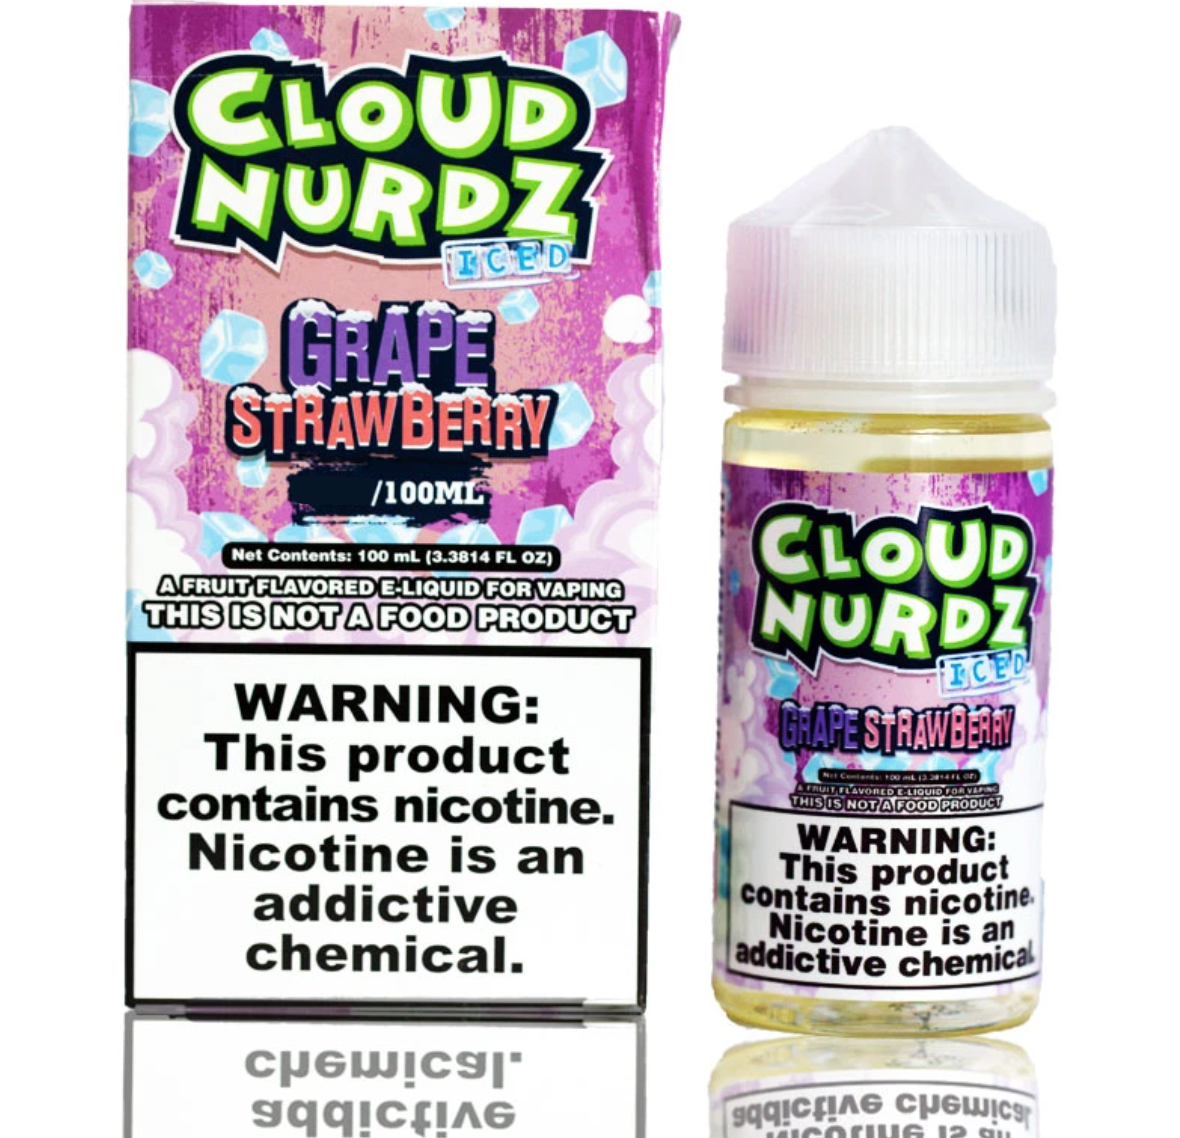 Cloud Nurdz Grape Strawberry Iced 0mg 100ml